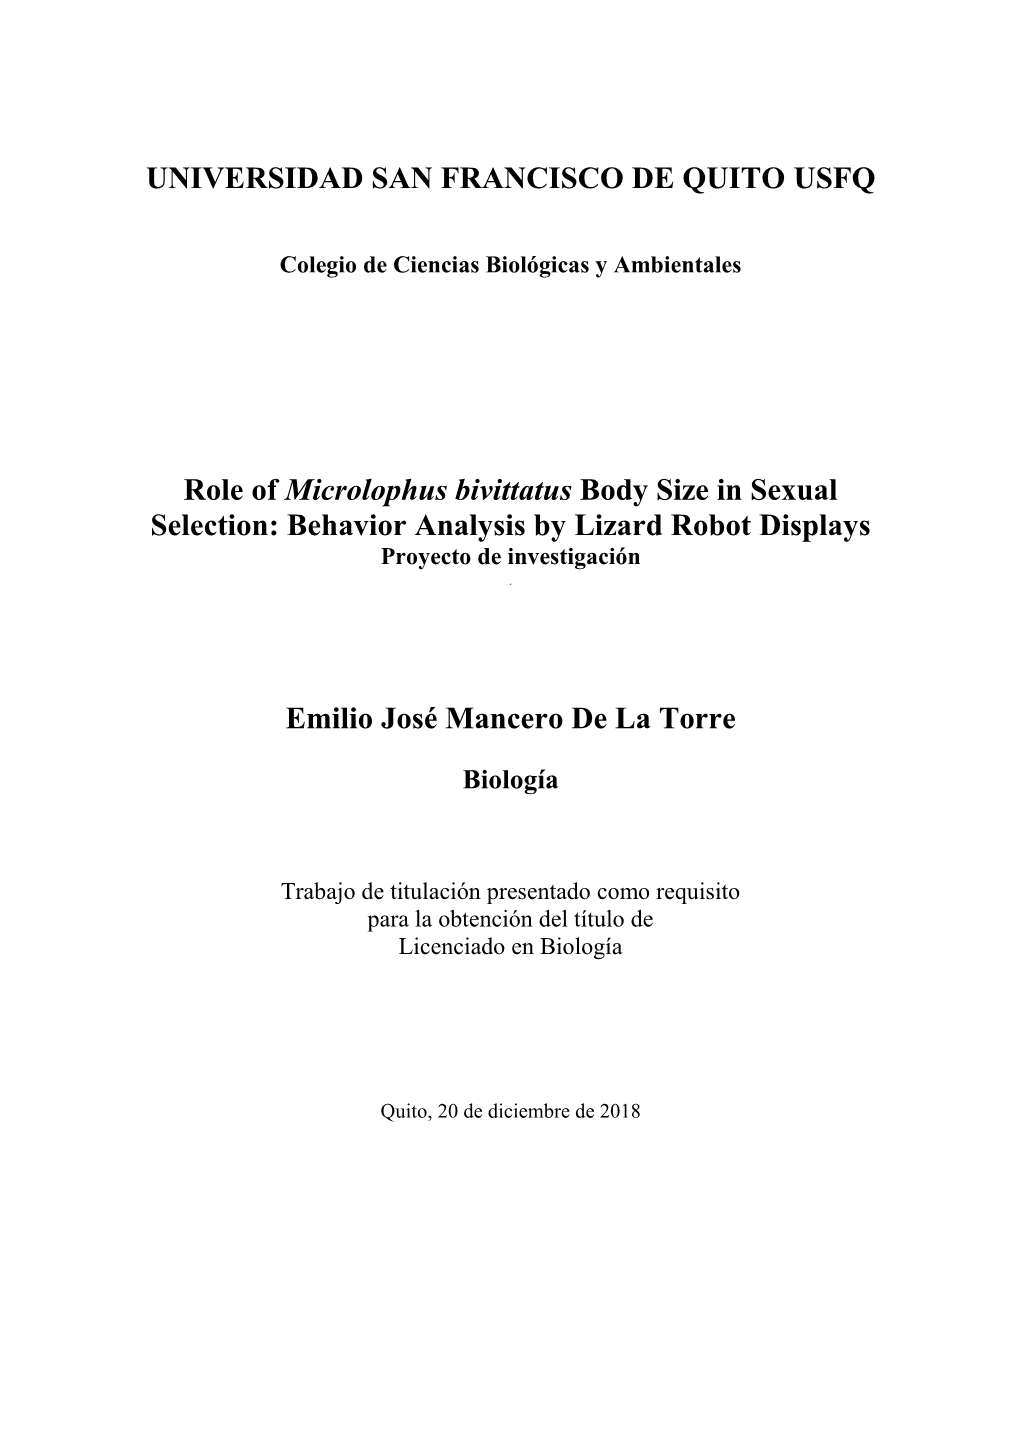 Role of Microlophus Bivittatus Body Size in Sexual Selection: Behavior Analysis by Lizard Robot Displays Proyecto De Investigación